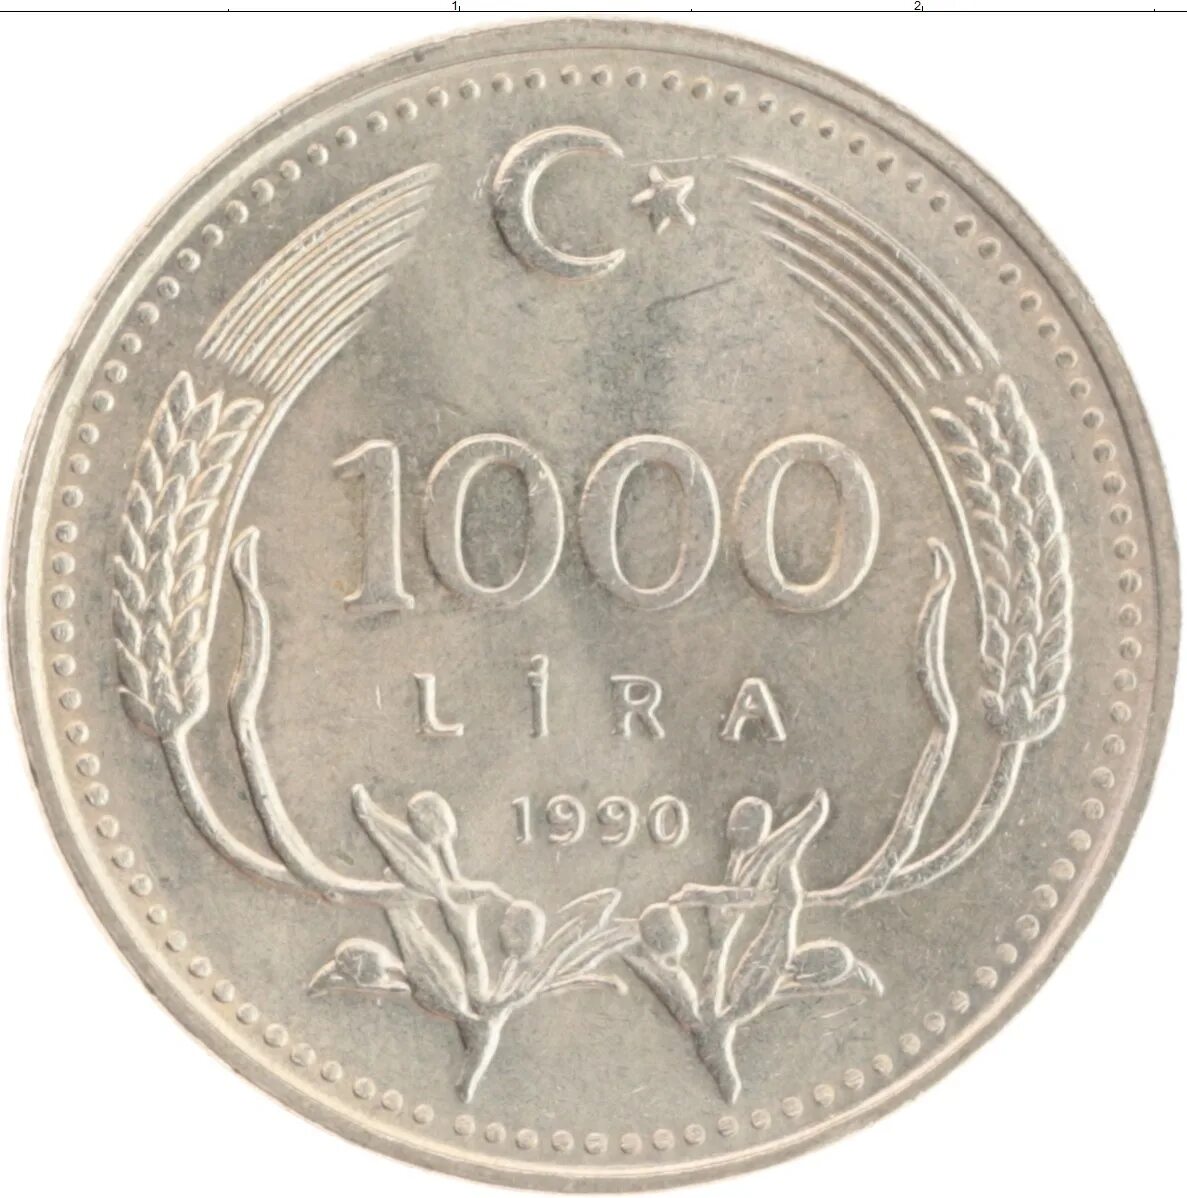 1000 Лир Турция. Монета Турция 10 лир 1998. 400 Лир в рублях. 100 Лир 1991 Турция Медно никелевая.